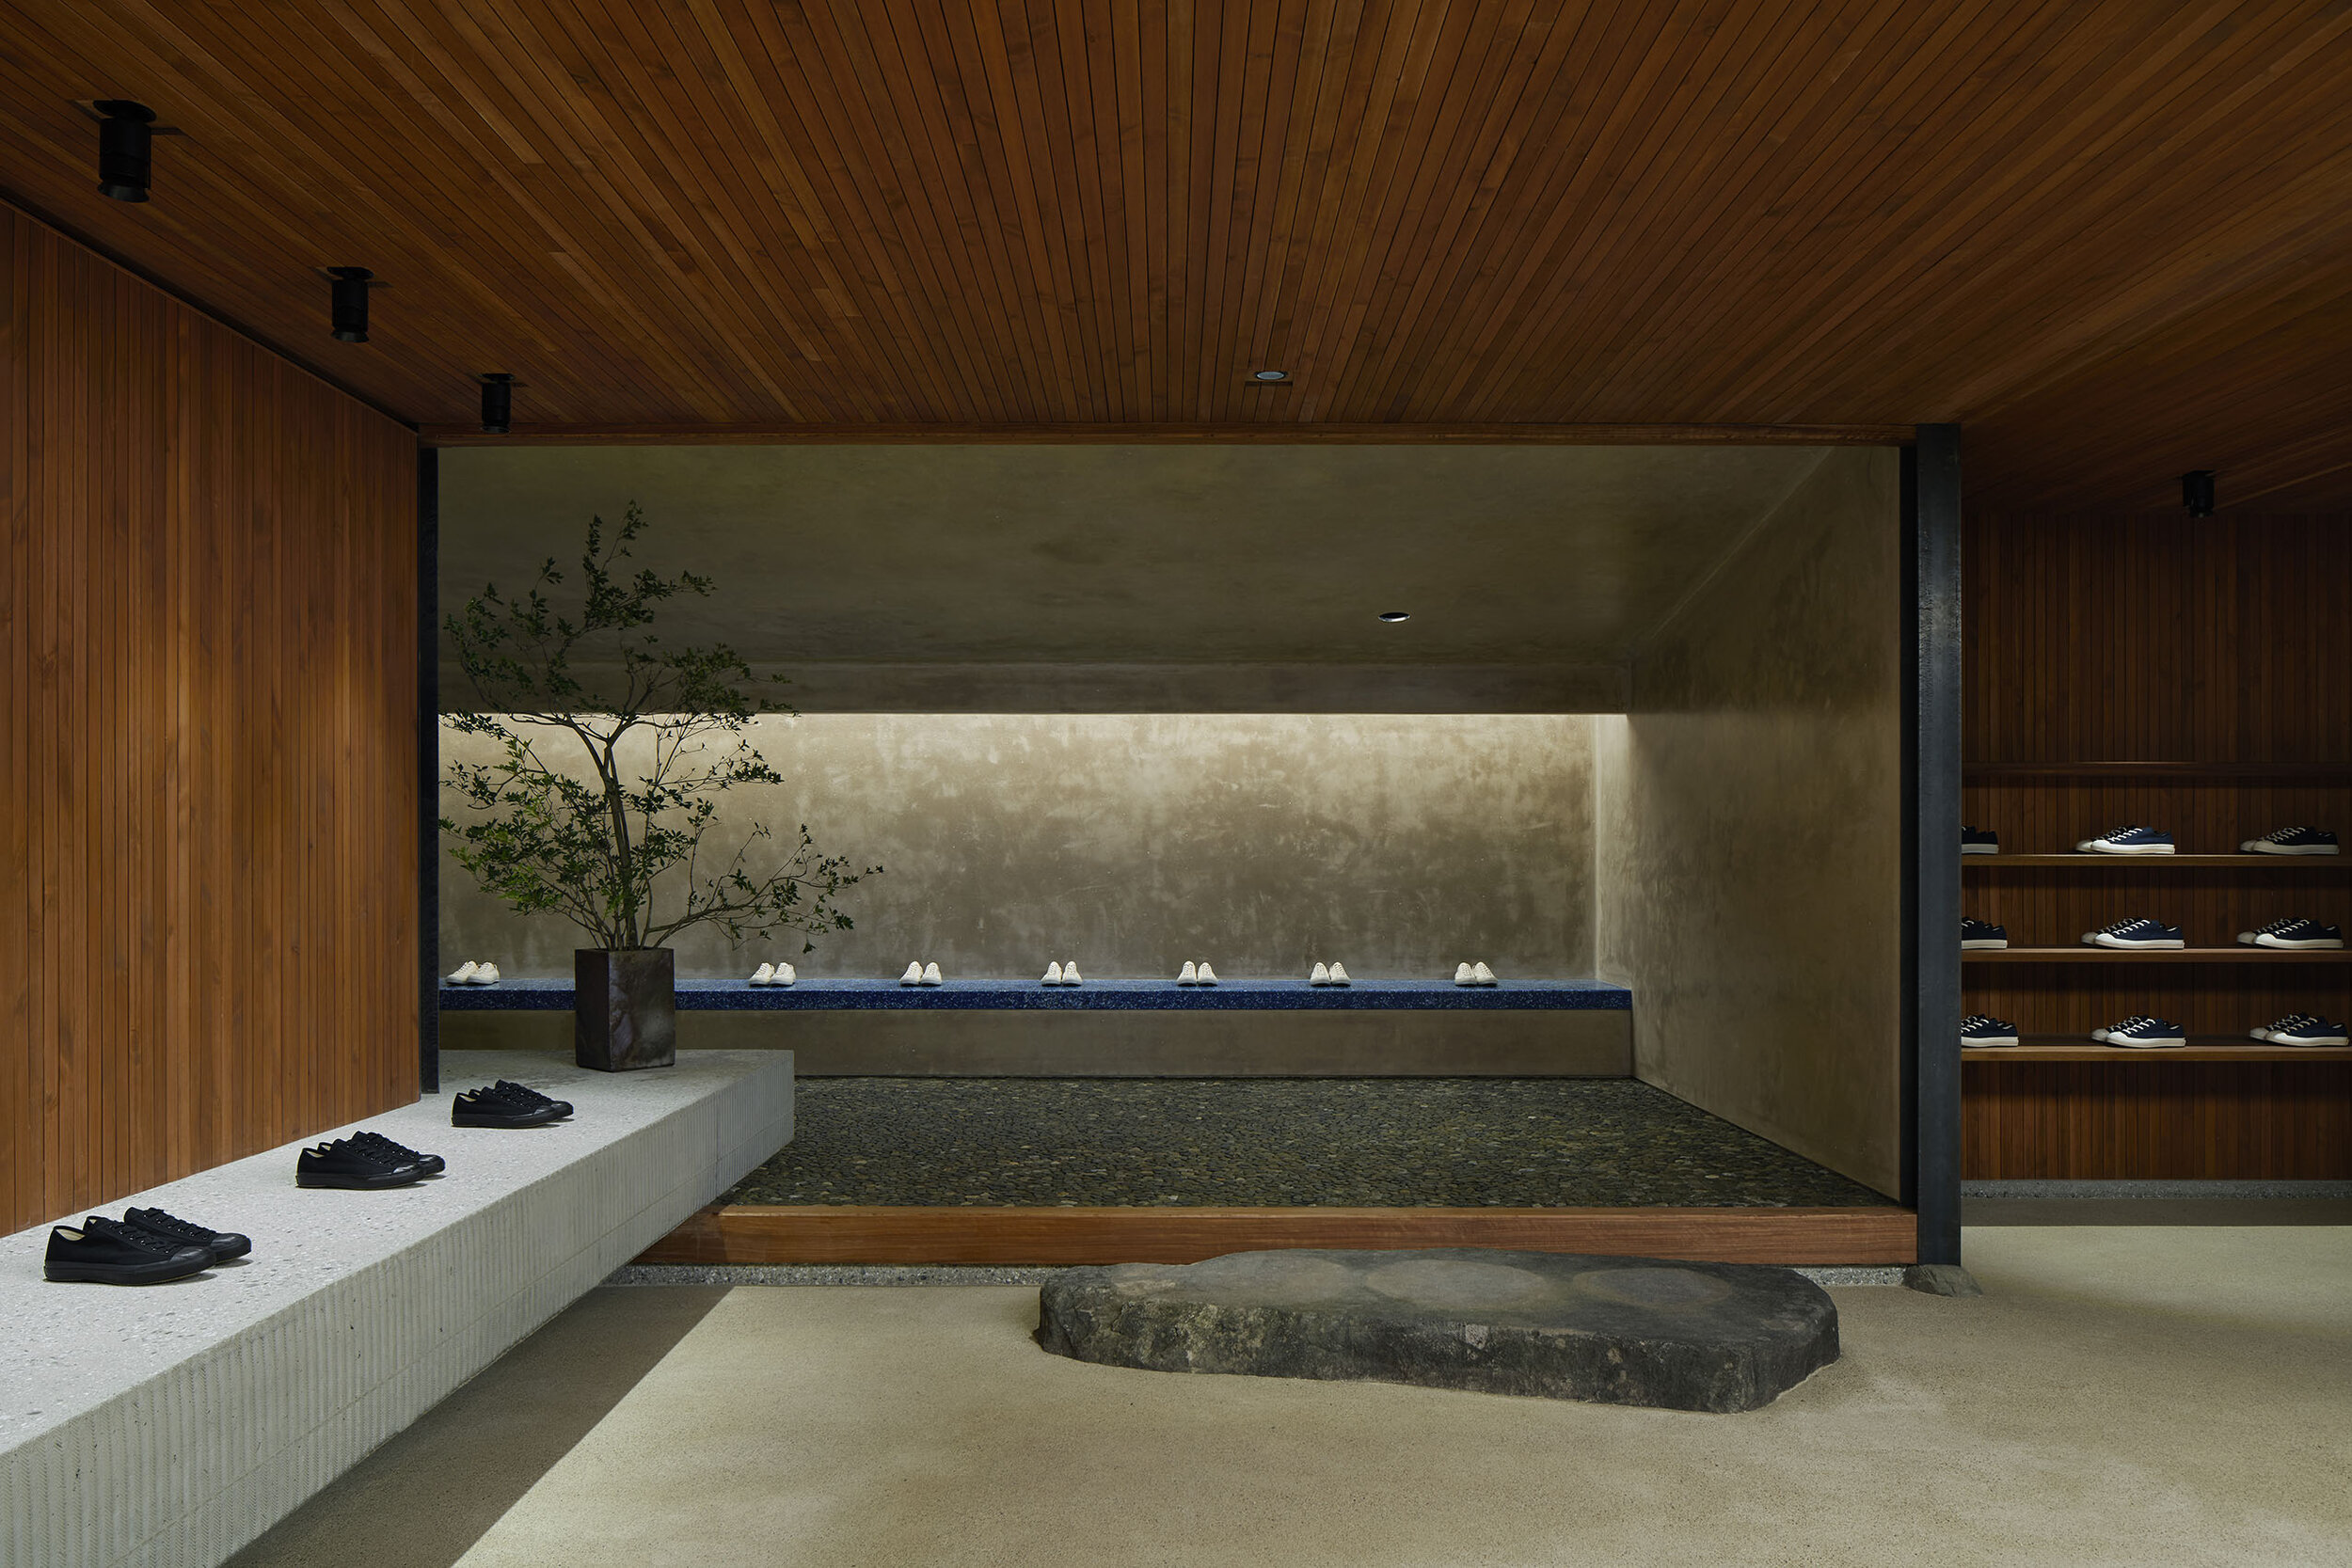 toru-shimokawa-architects-also-moonstar-interior-design-magazine-idreit-15.jpg